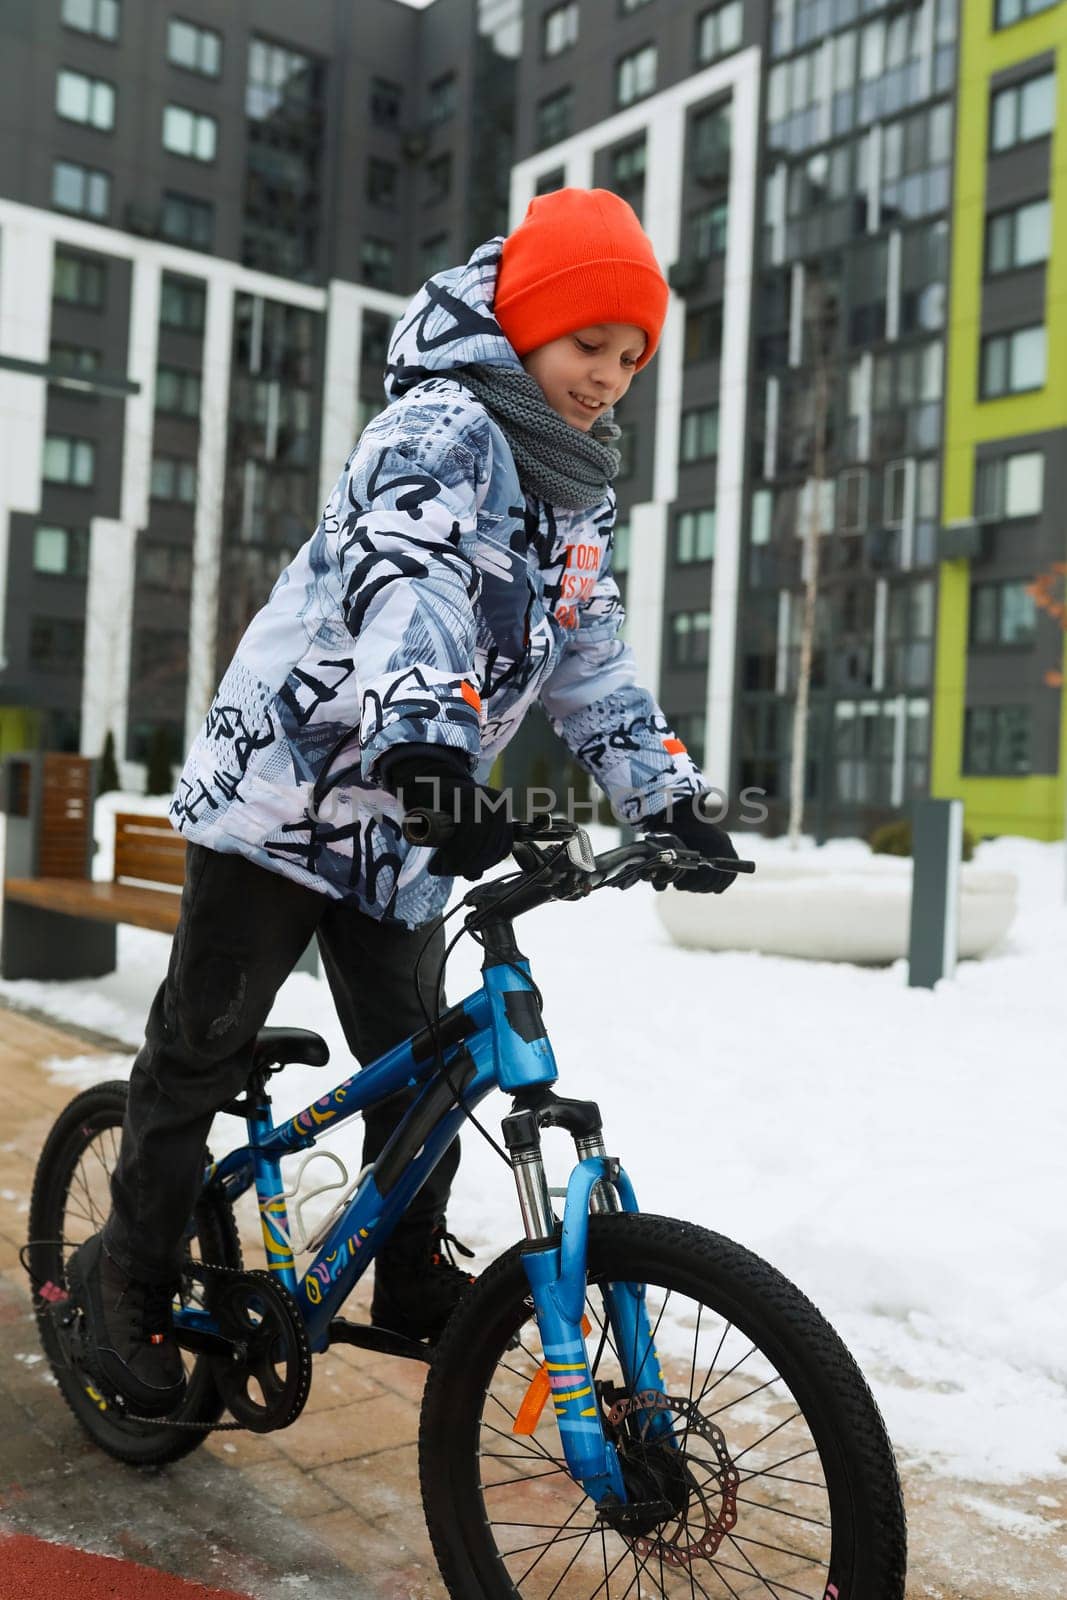 A male child rides a sports bike in the cold season.